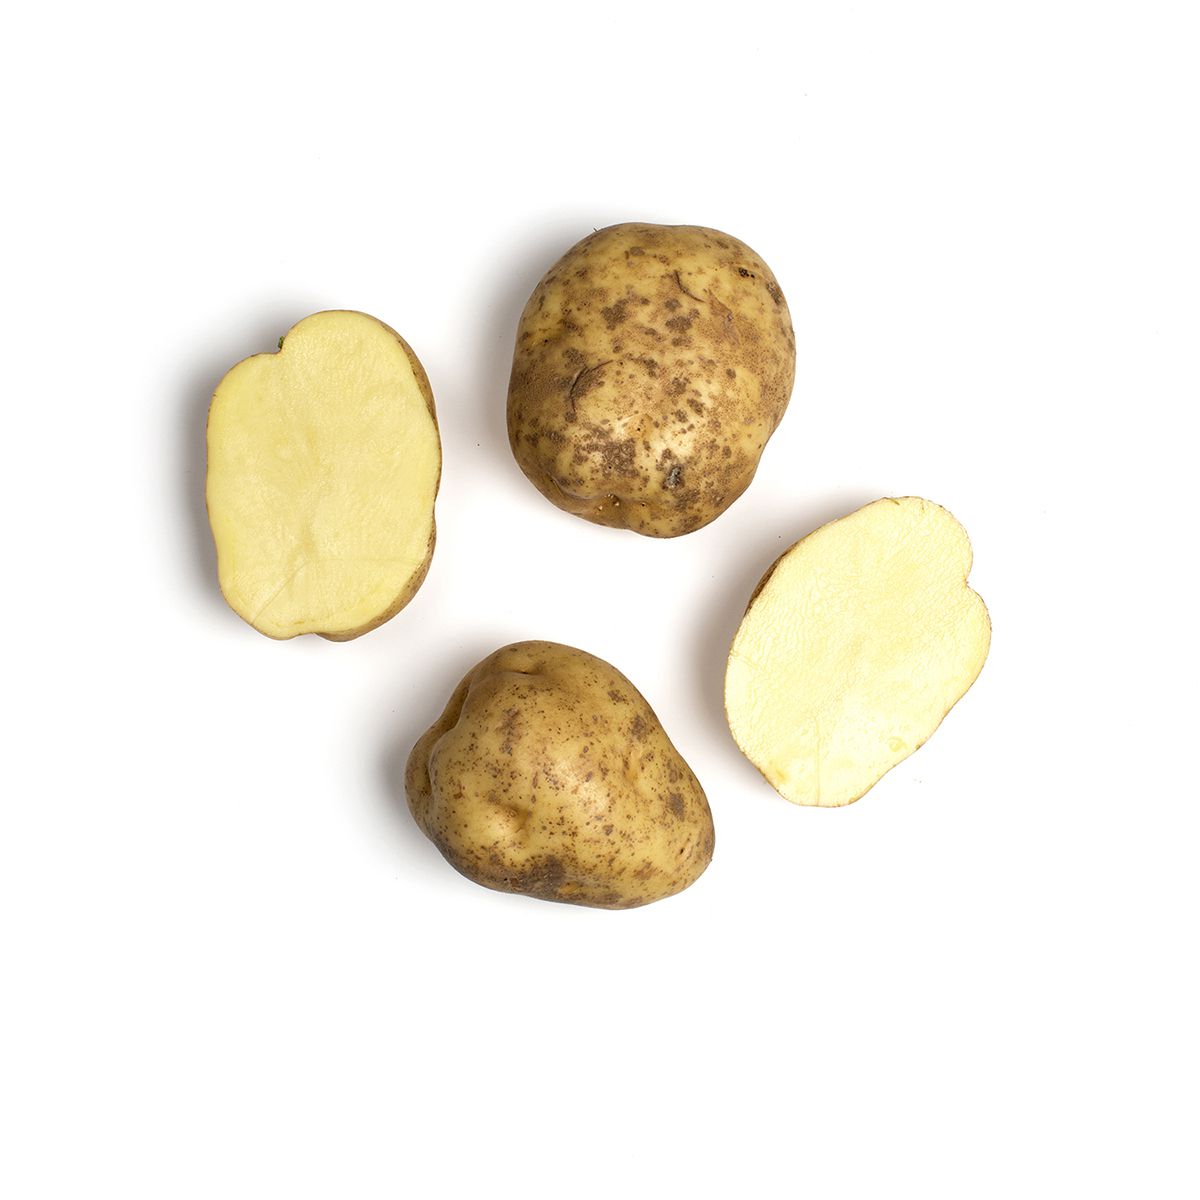 Green Thumb Farms Norwis Signature Frying Potatoes